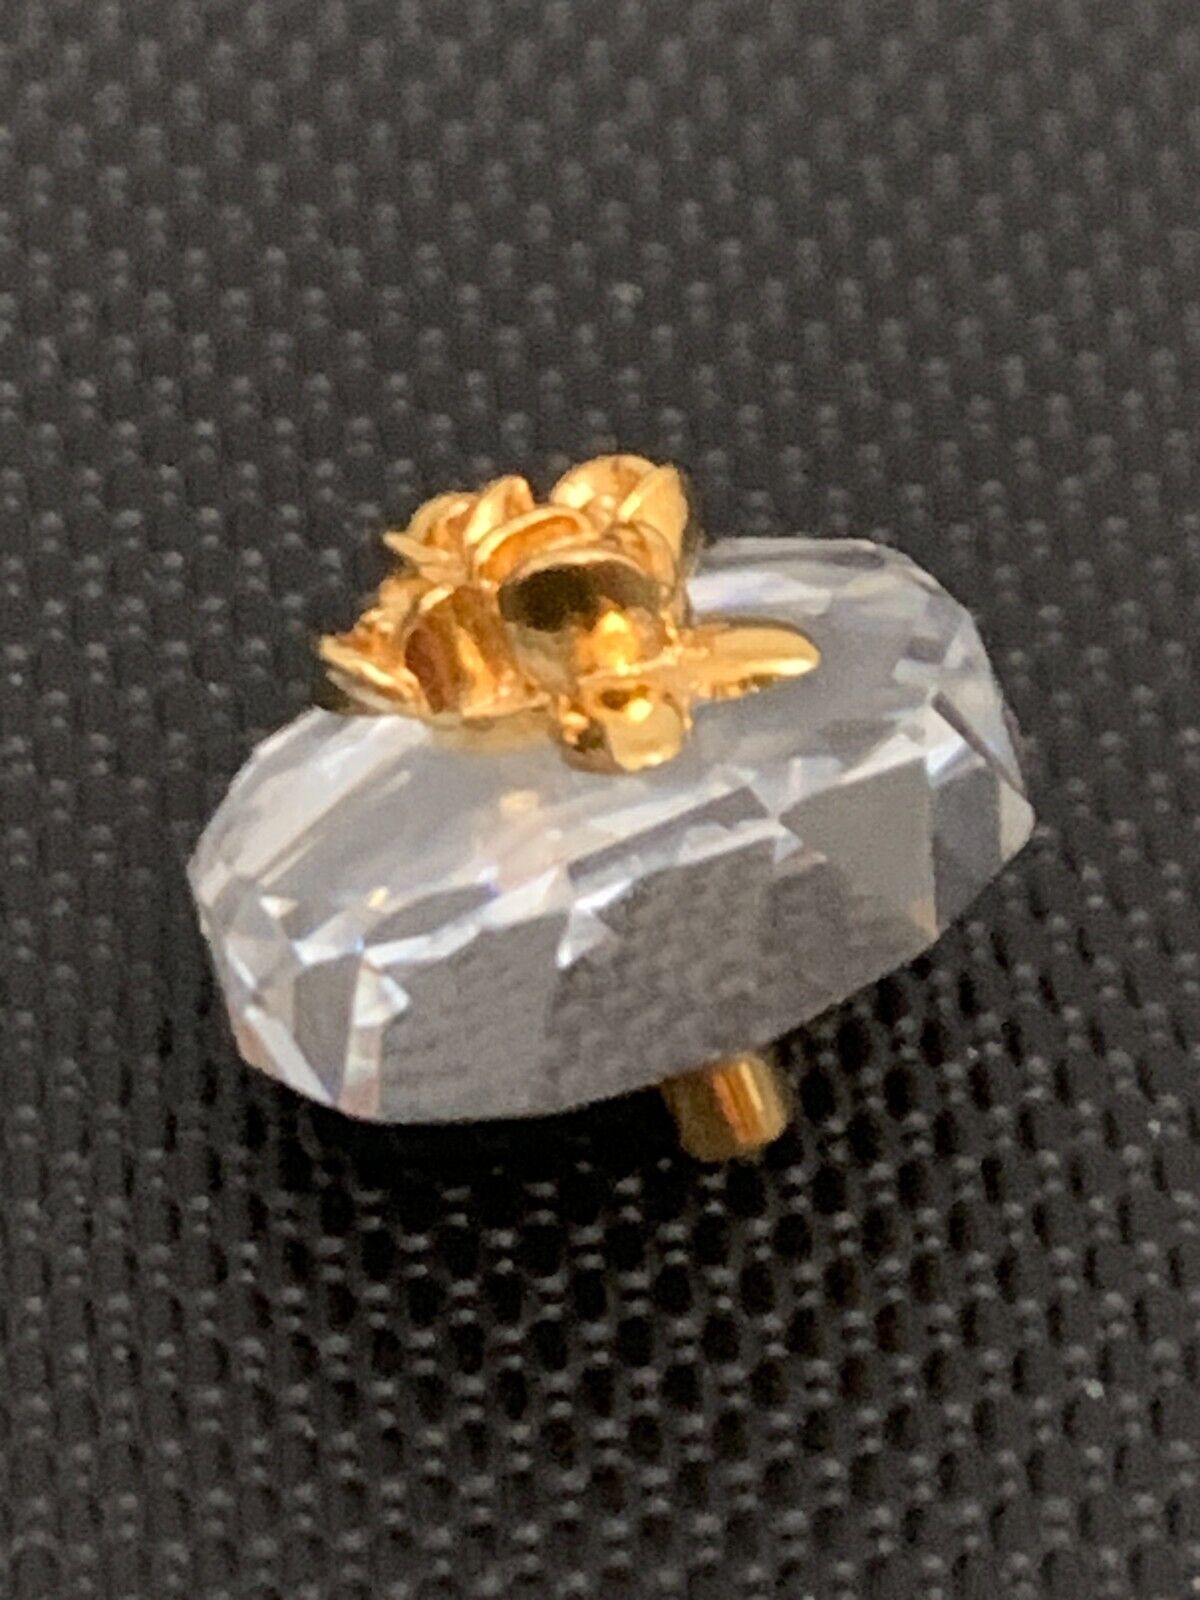 Replacement Pc for Swarovski Crystal Memories Gold Miniature 3-Tier Wedding Cake